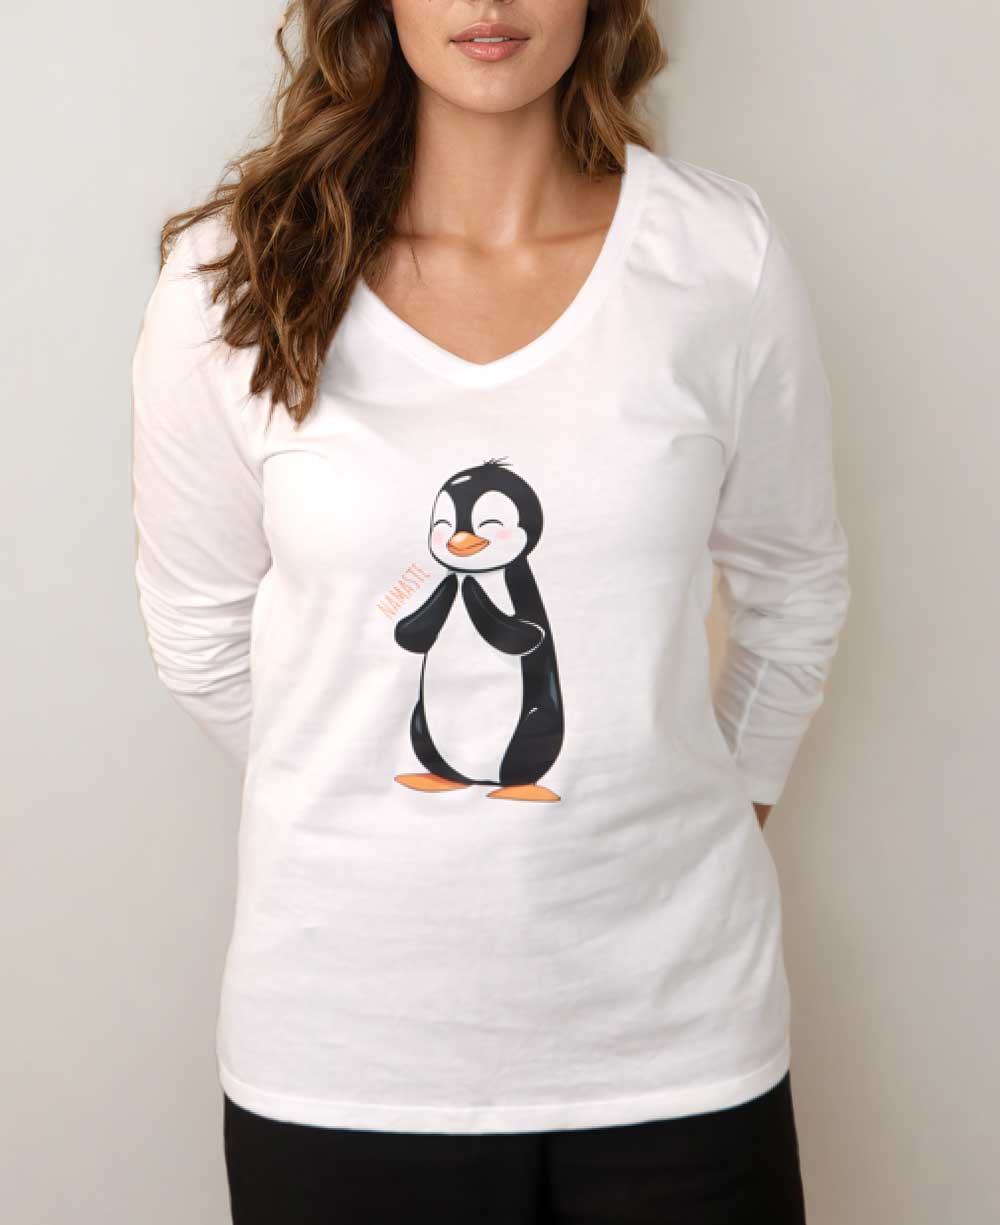 Namaste Penguin T-Shirt in White - Shirts & Tops S